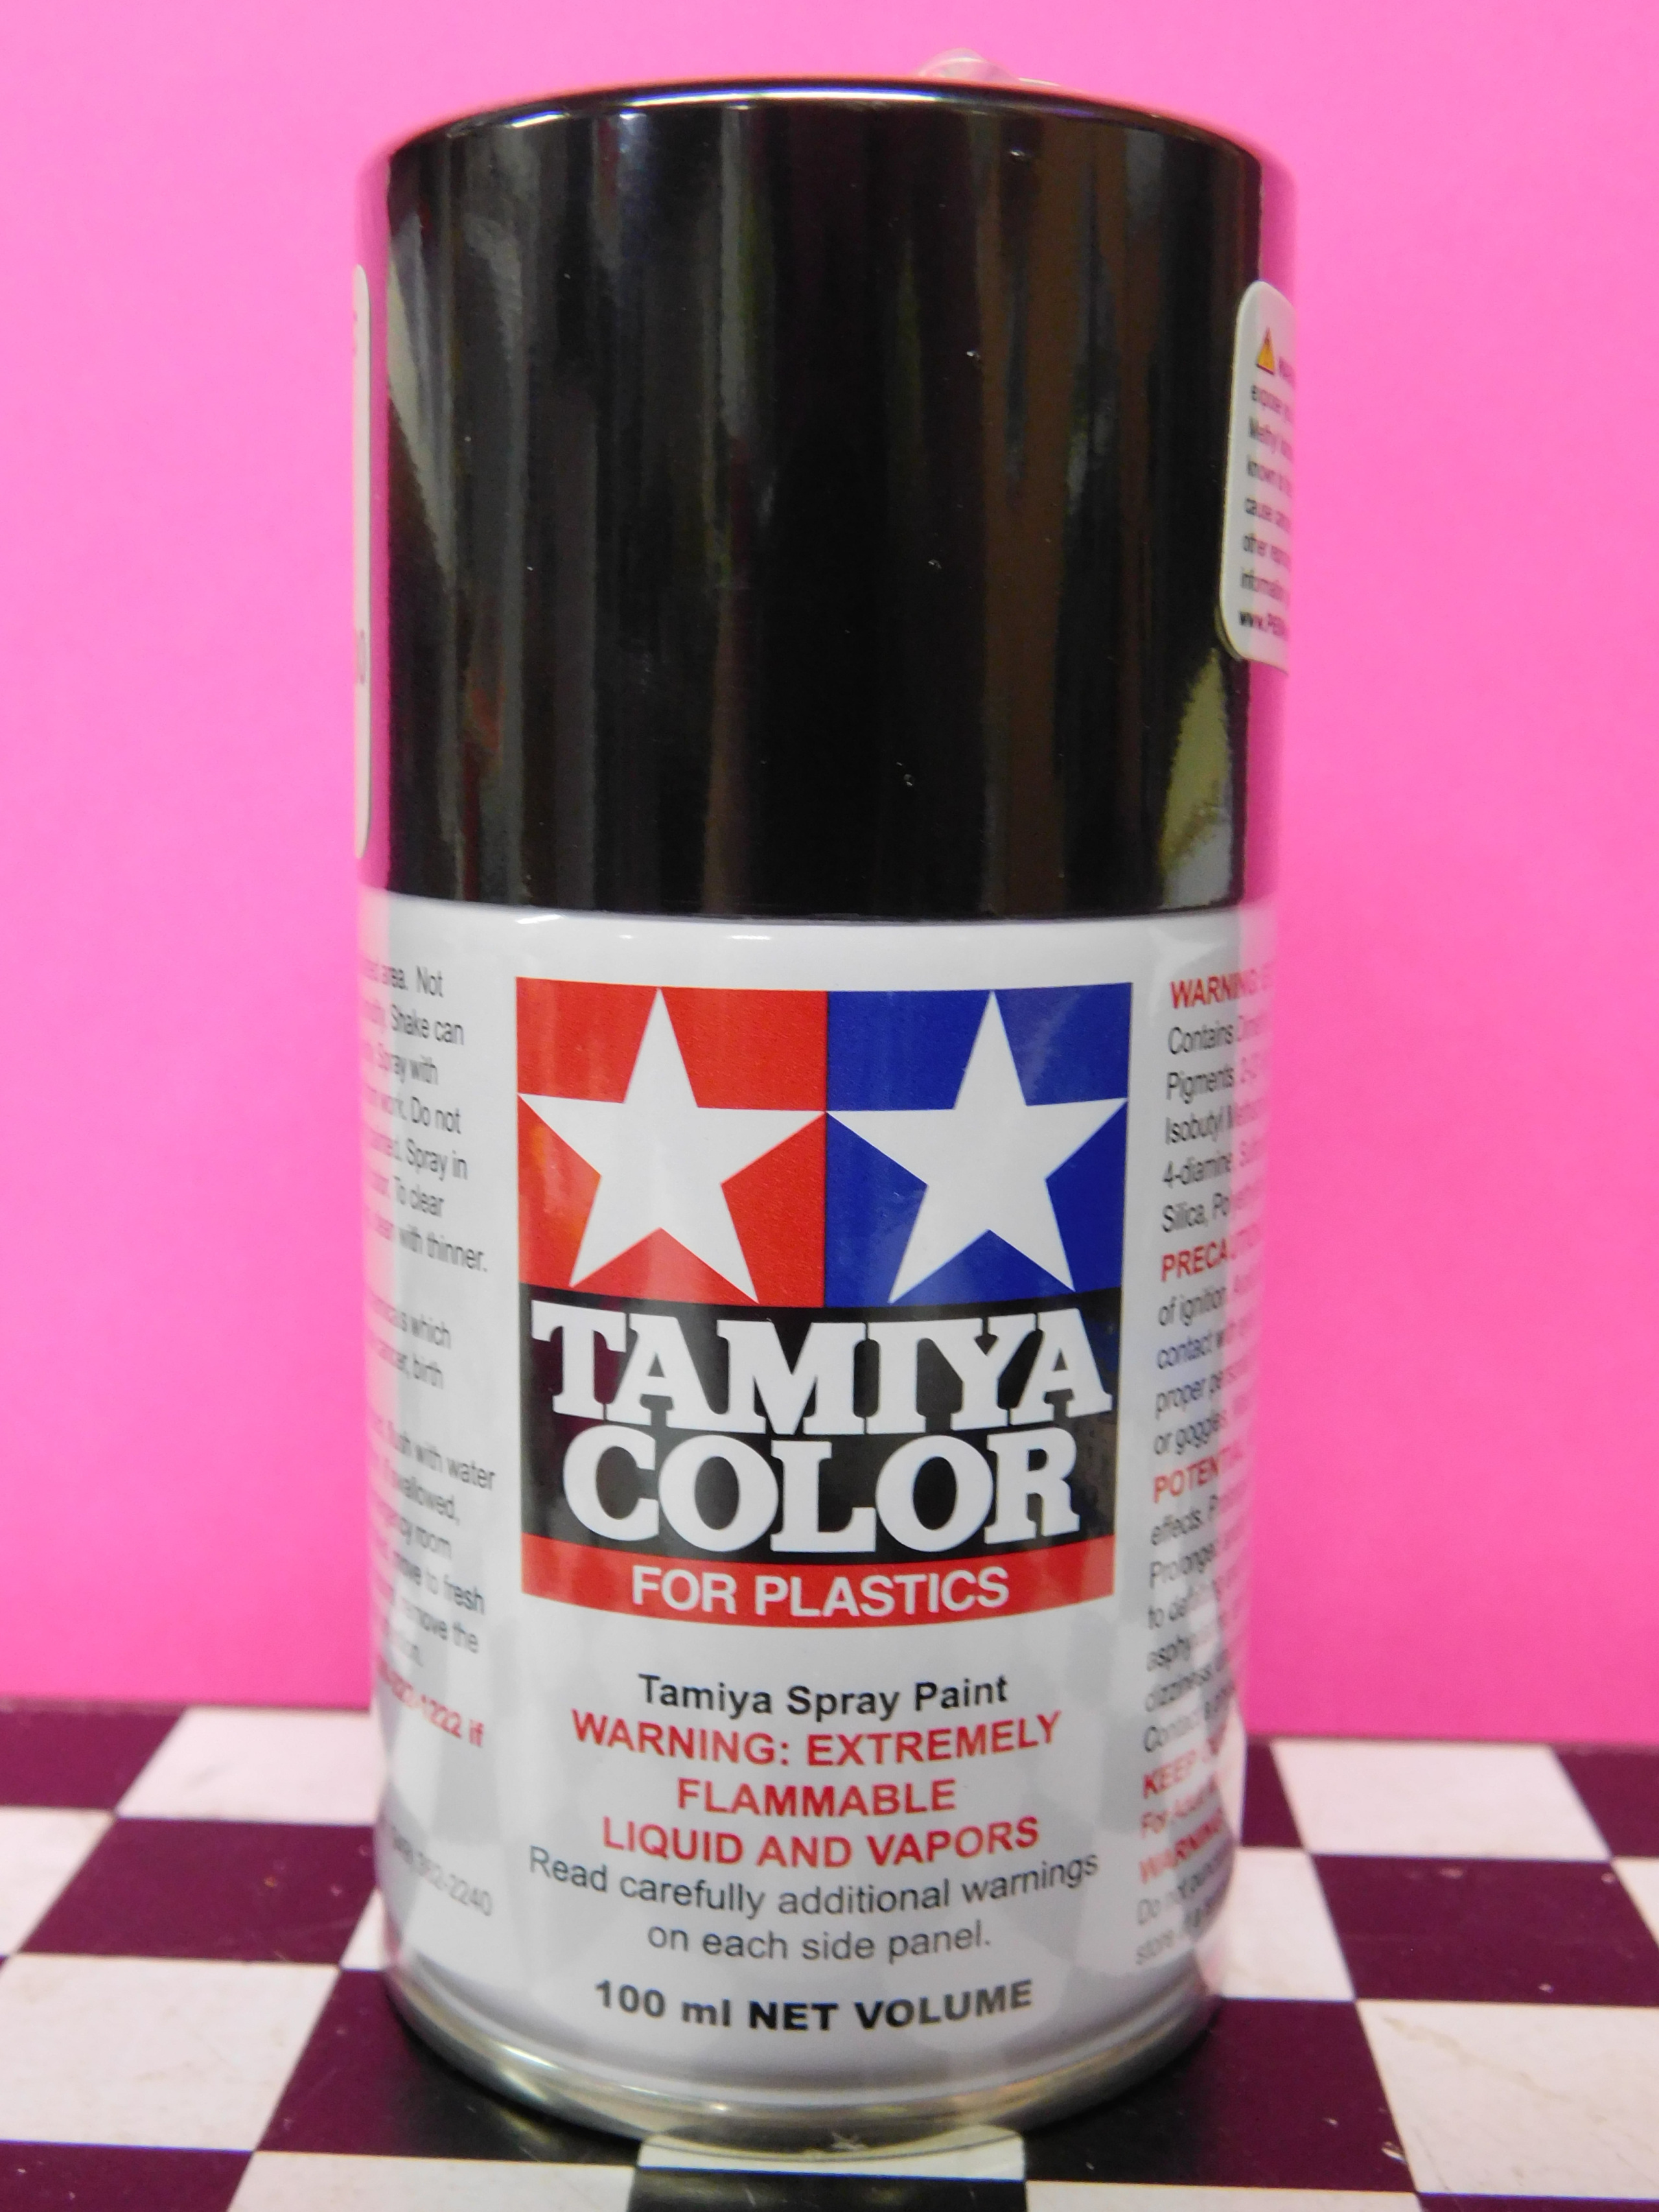 Tamiya TS-29 SEMI GLOSS BLACK Plastic Model Spray Paint (TAM85029)